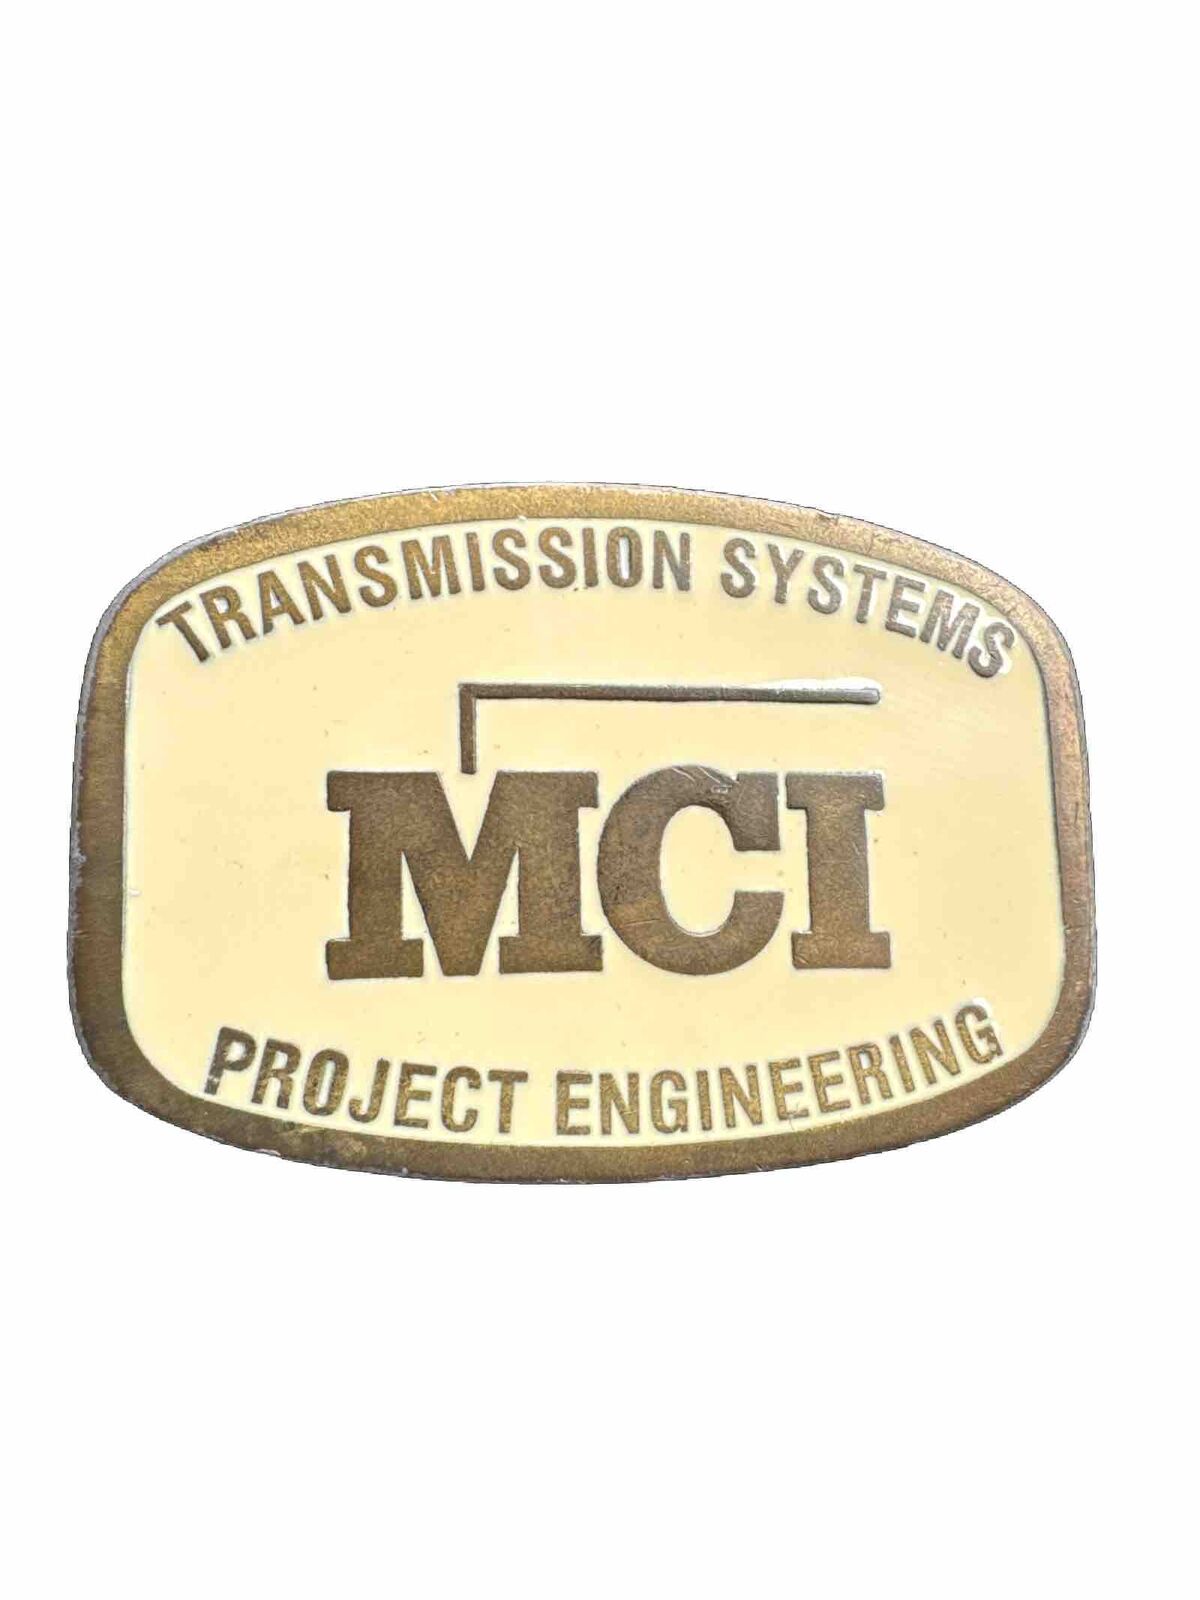 MCI Communications Solid Brass Belt Buckle; Vintage 1990s Telecom Engineering